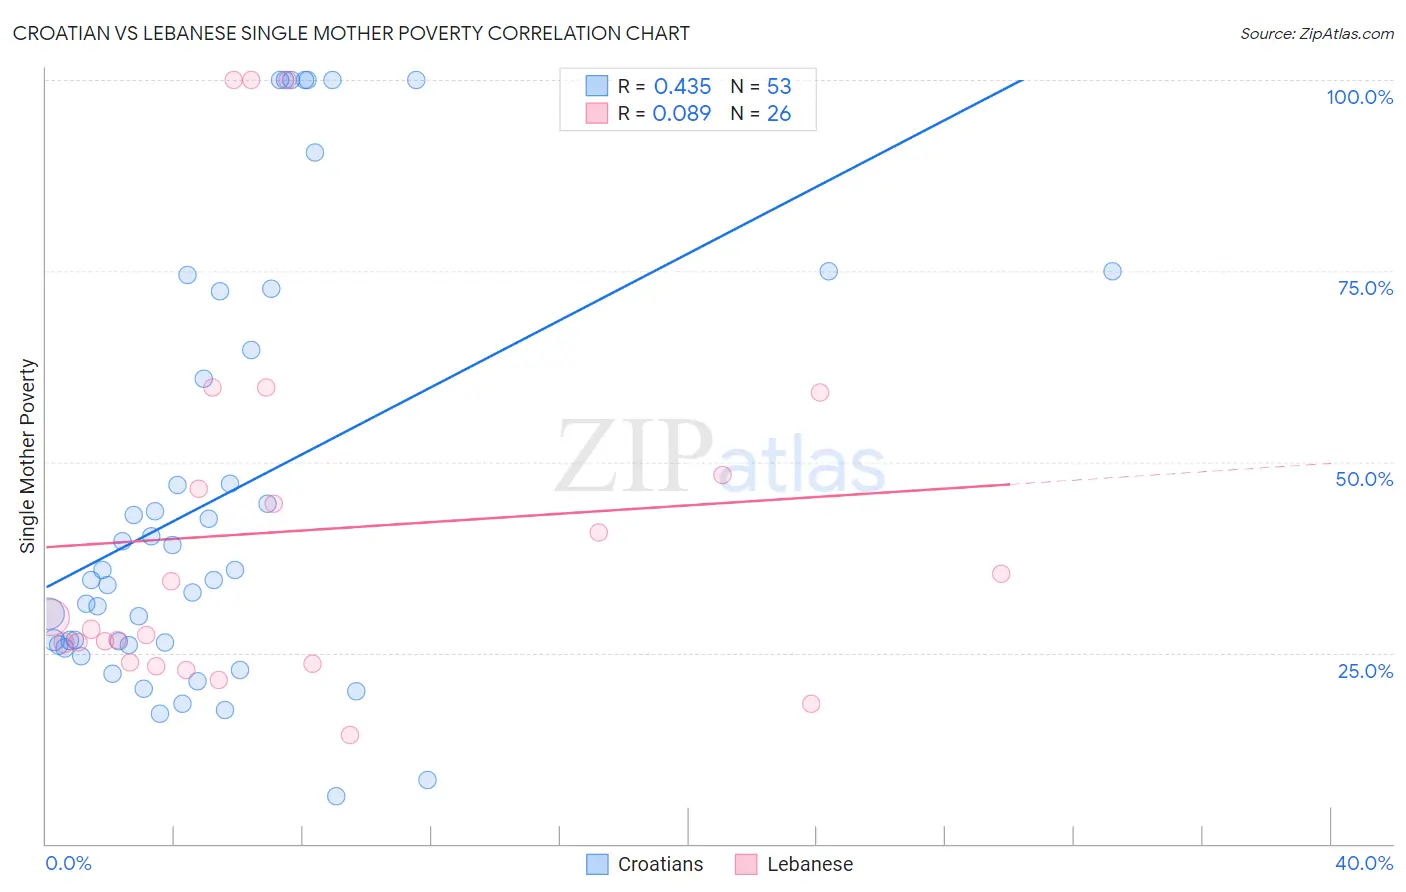 Croatian vs Lebanese Single Mother Poverty